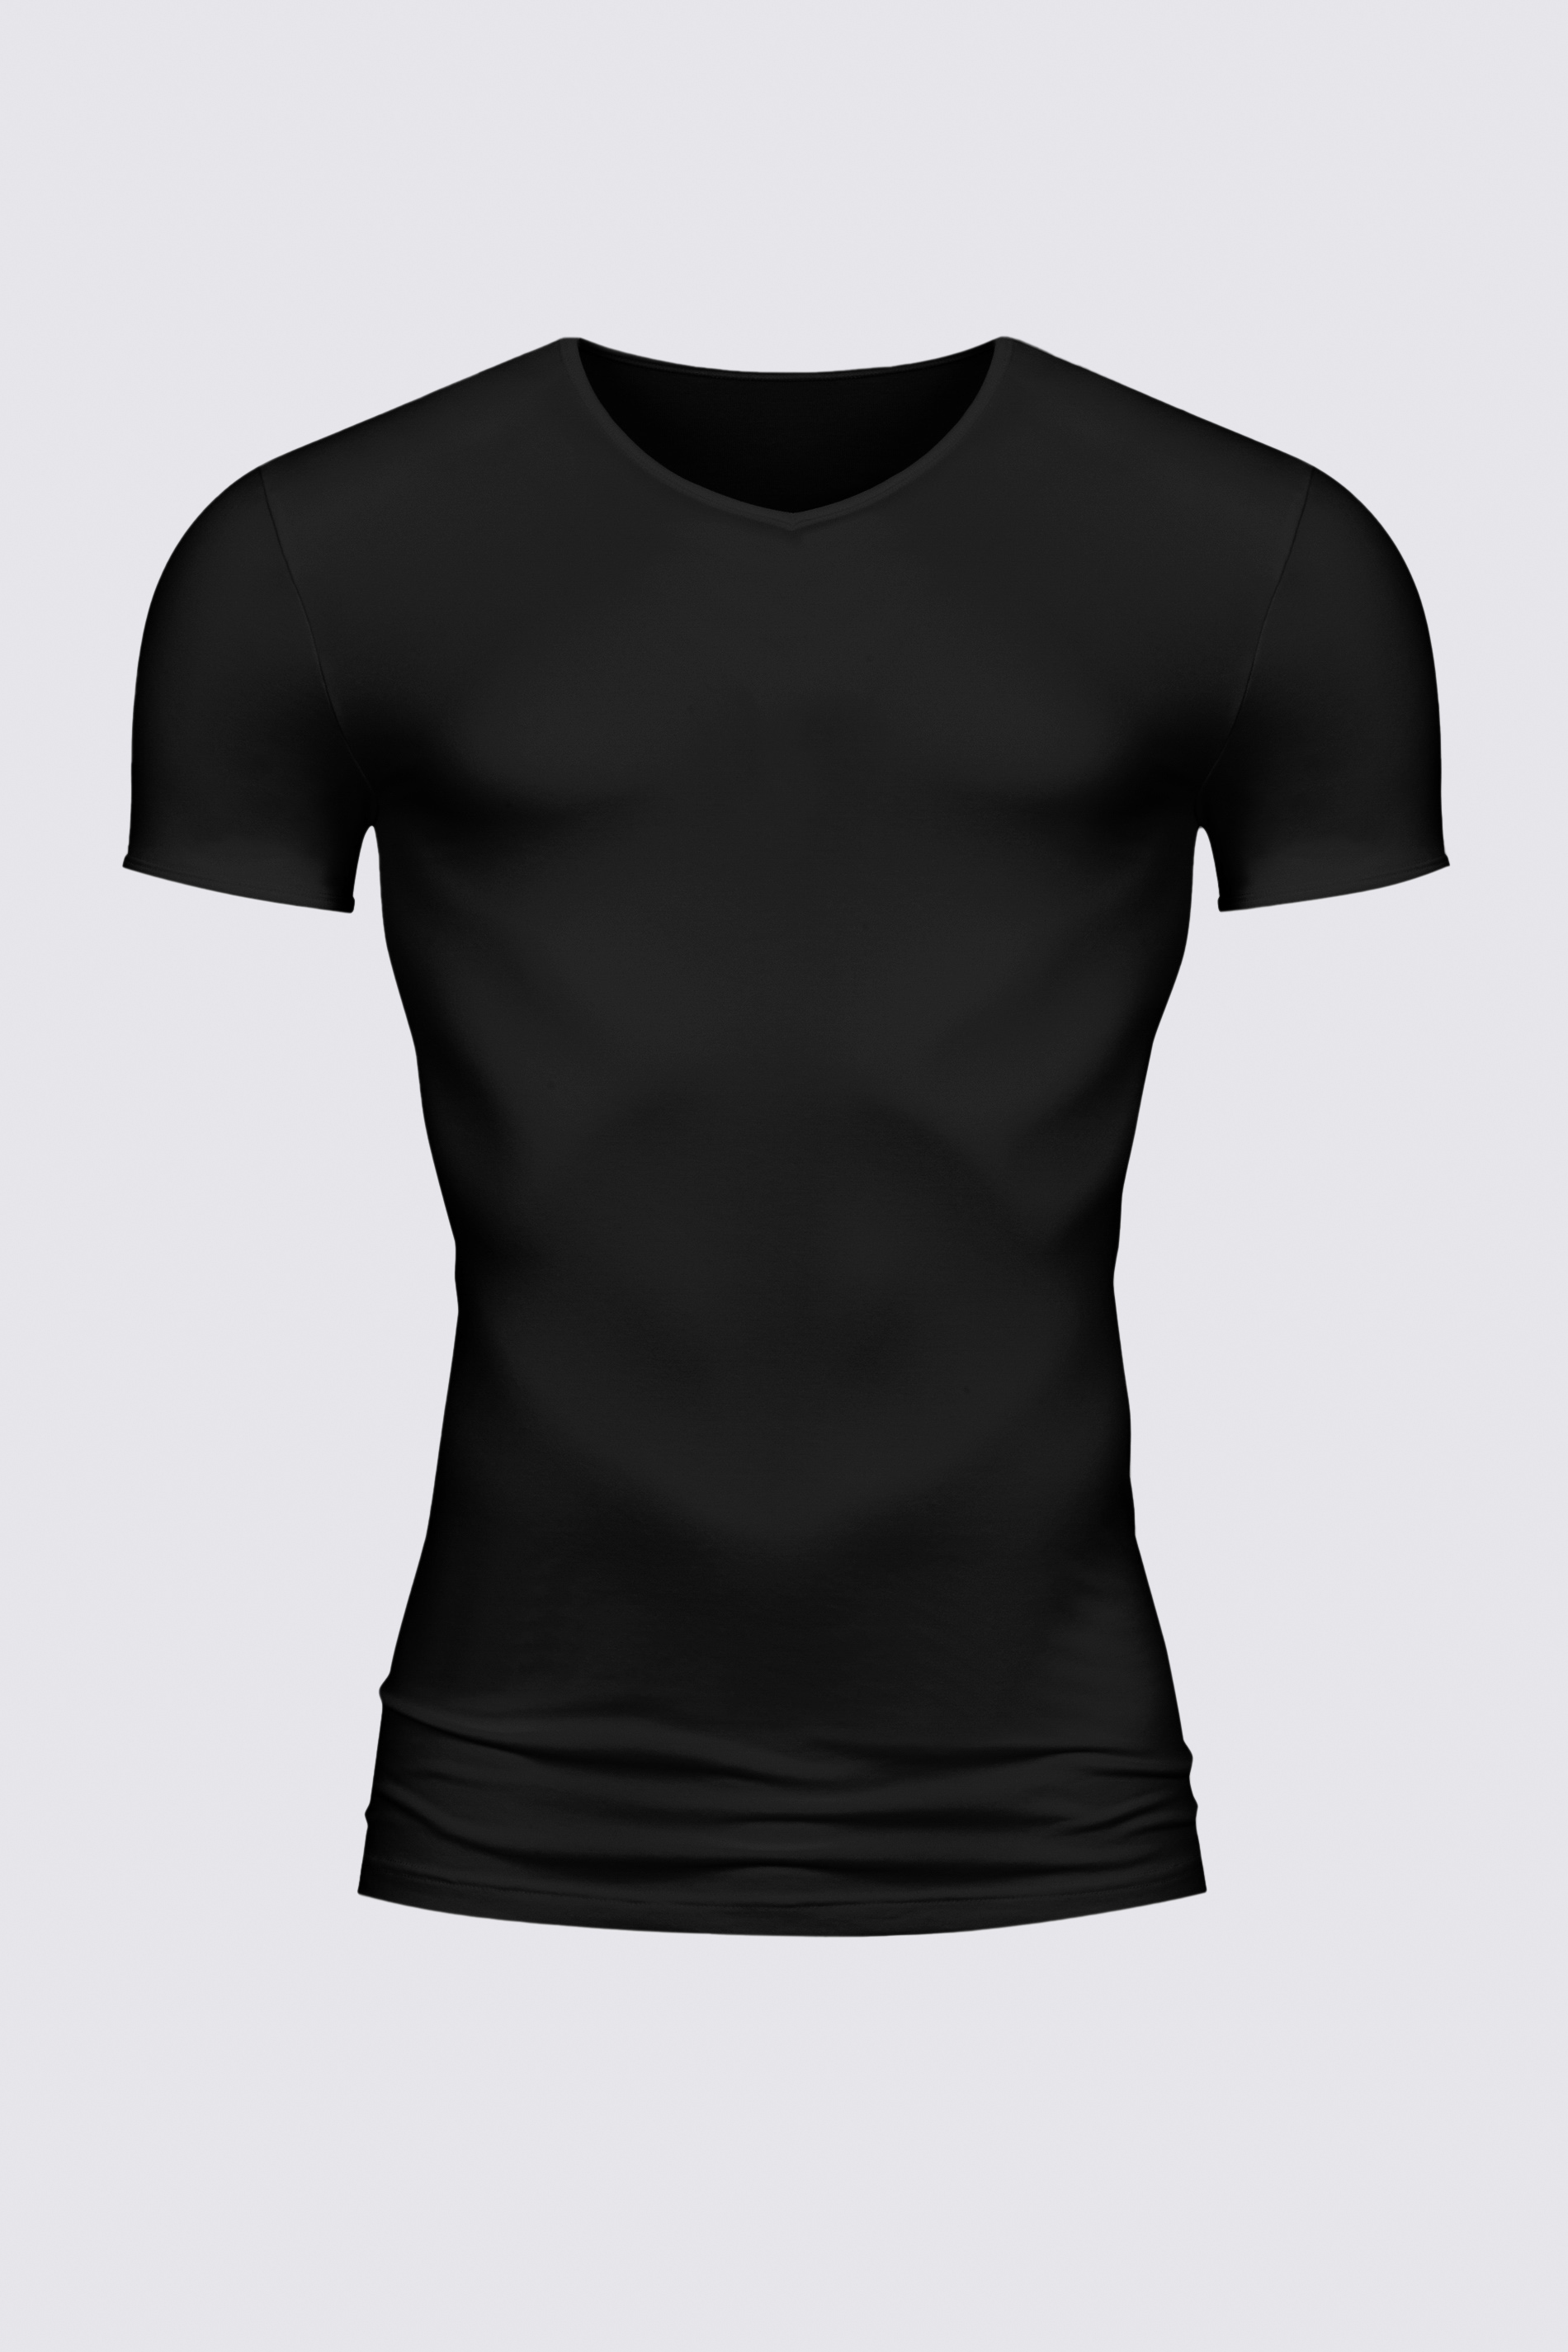 Shirt Schwarz Serie Software Freisteller | mey®